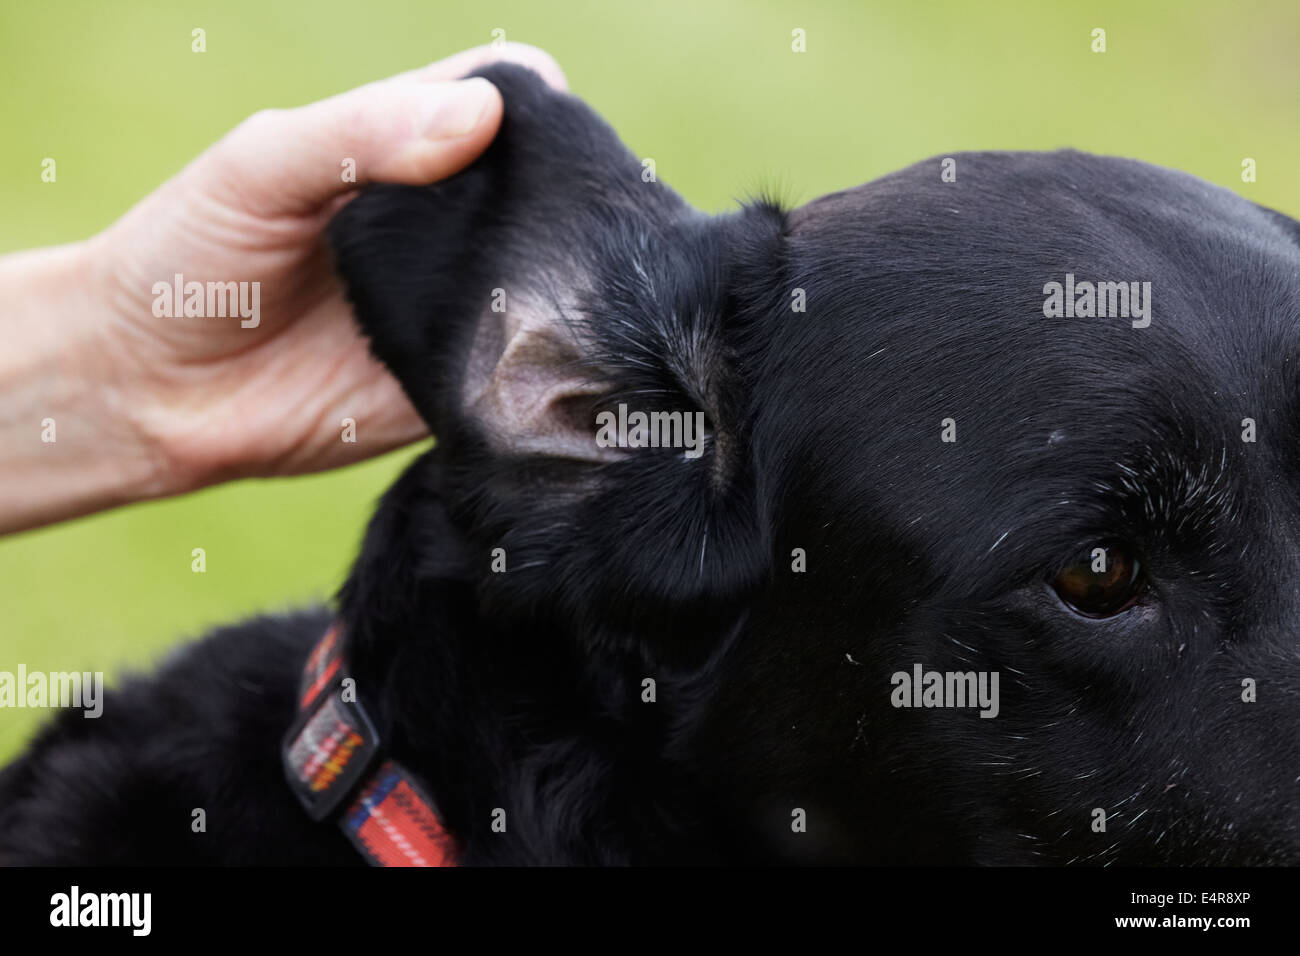 Dog health check: Owner checking Labrador's ears Stock Photo